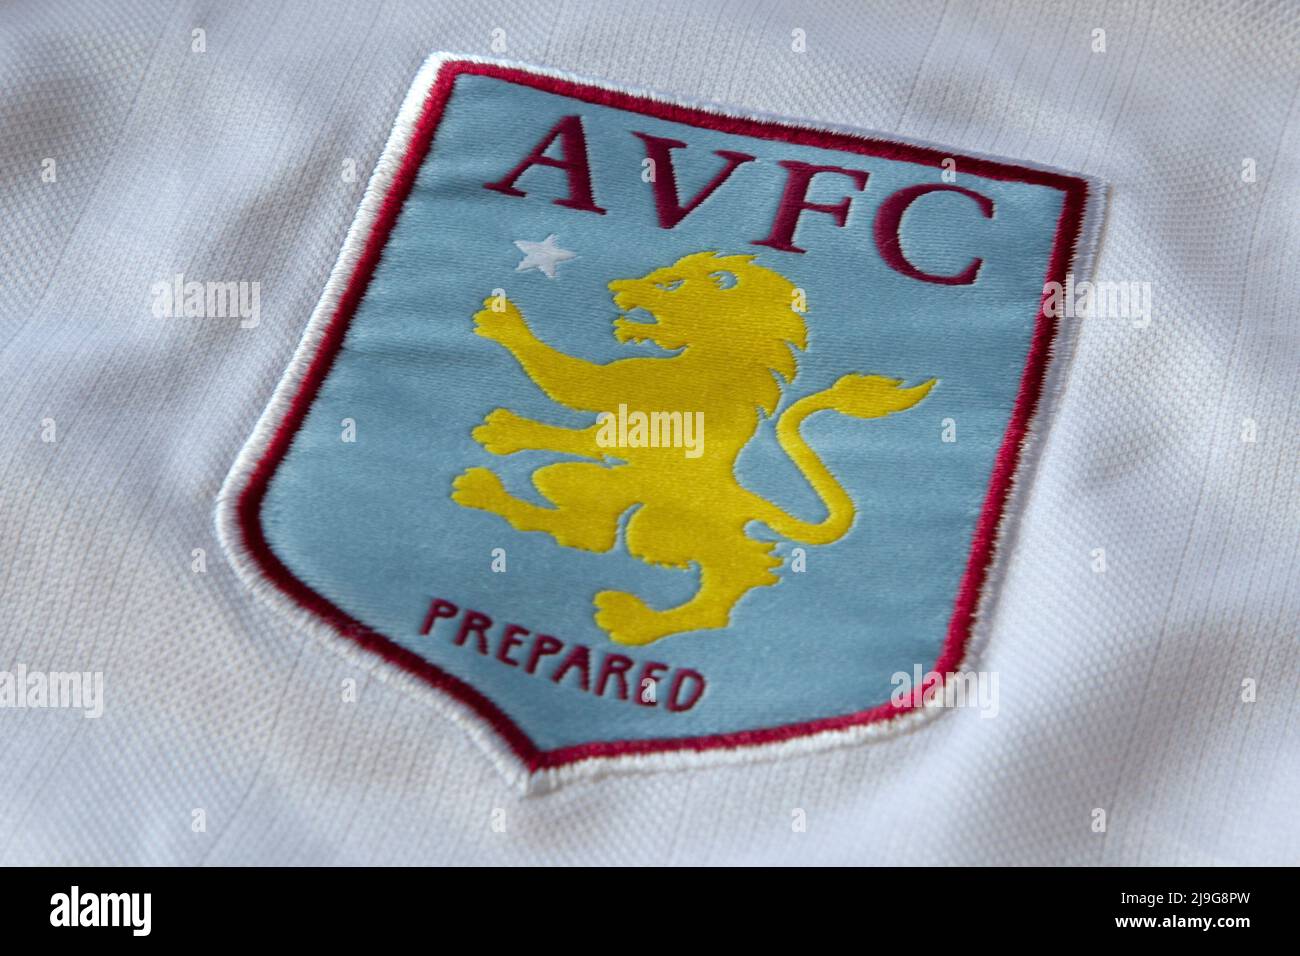 Aston Villa Crest (emblem) pictured on a football shirt Stock Photo